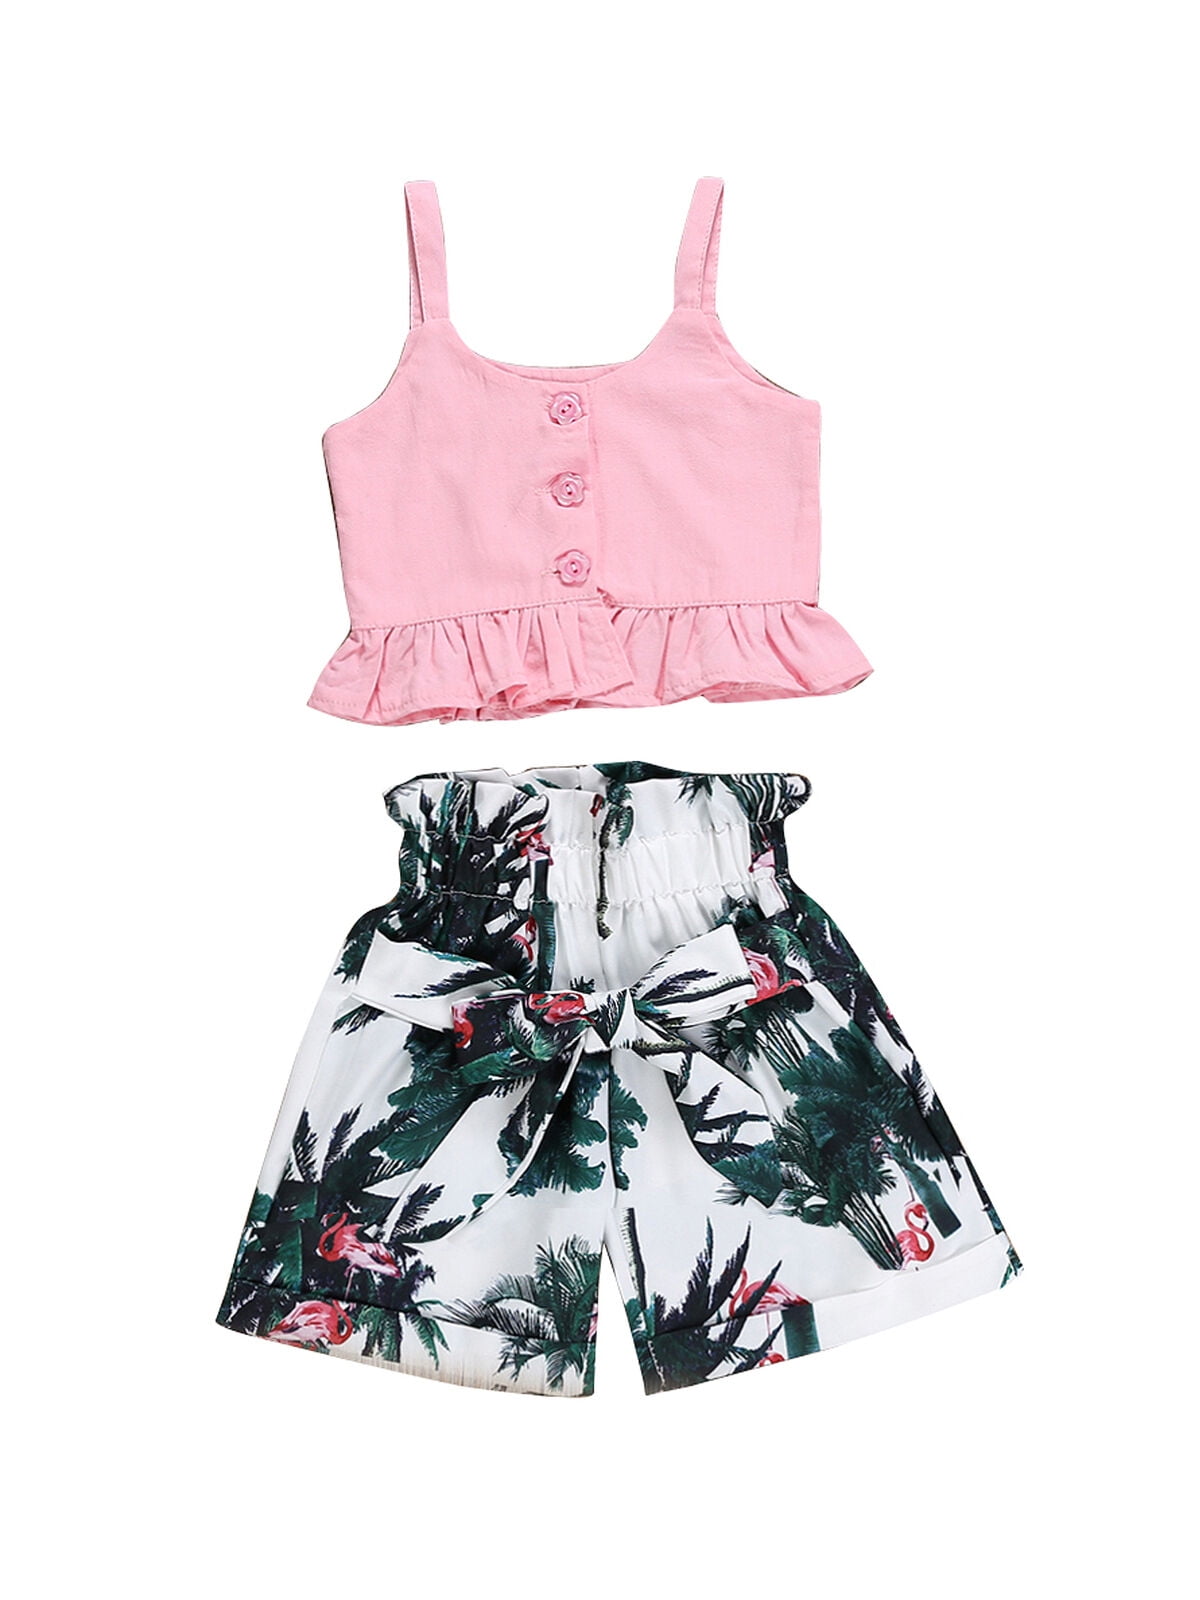 Multitrust - Multitrust Flamingo Toddler Baby Girl Vest Crop Tops Short Pants Outfits Clothes Summer